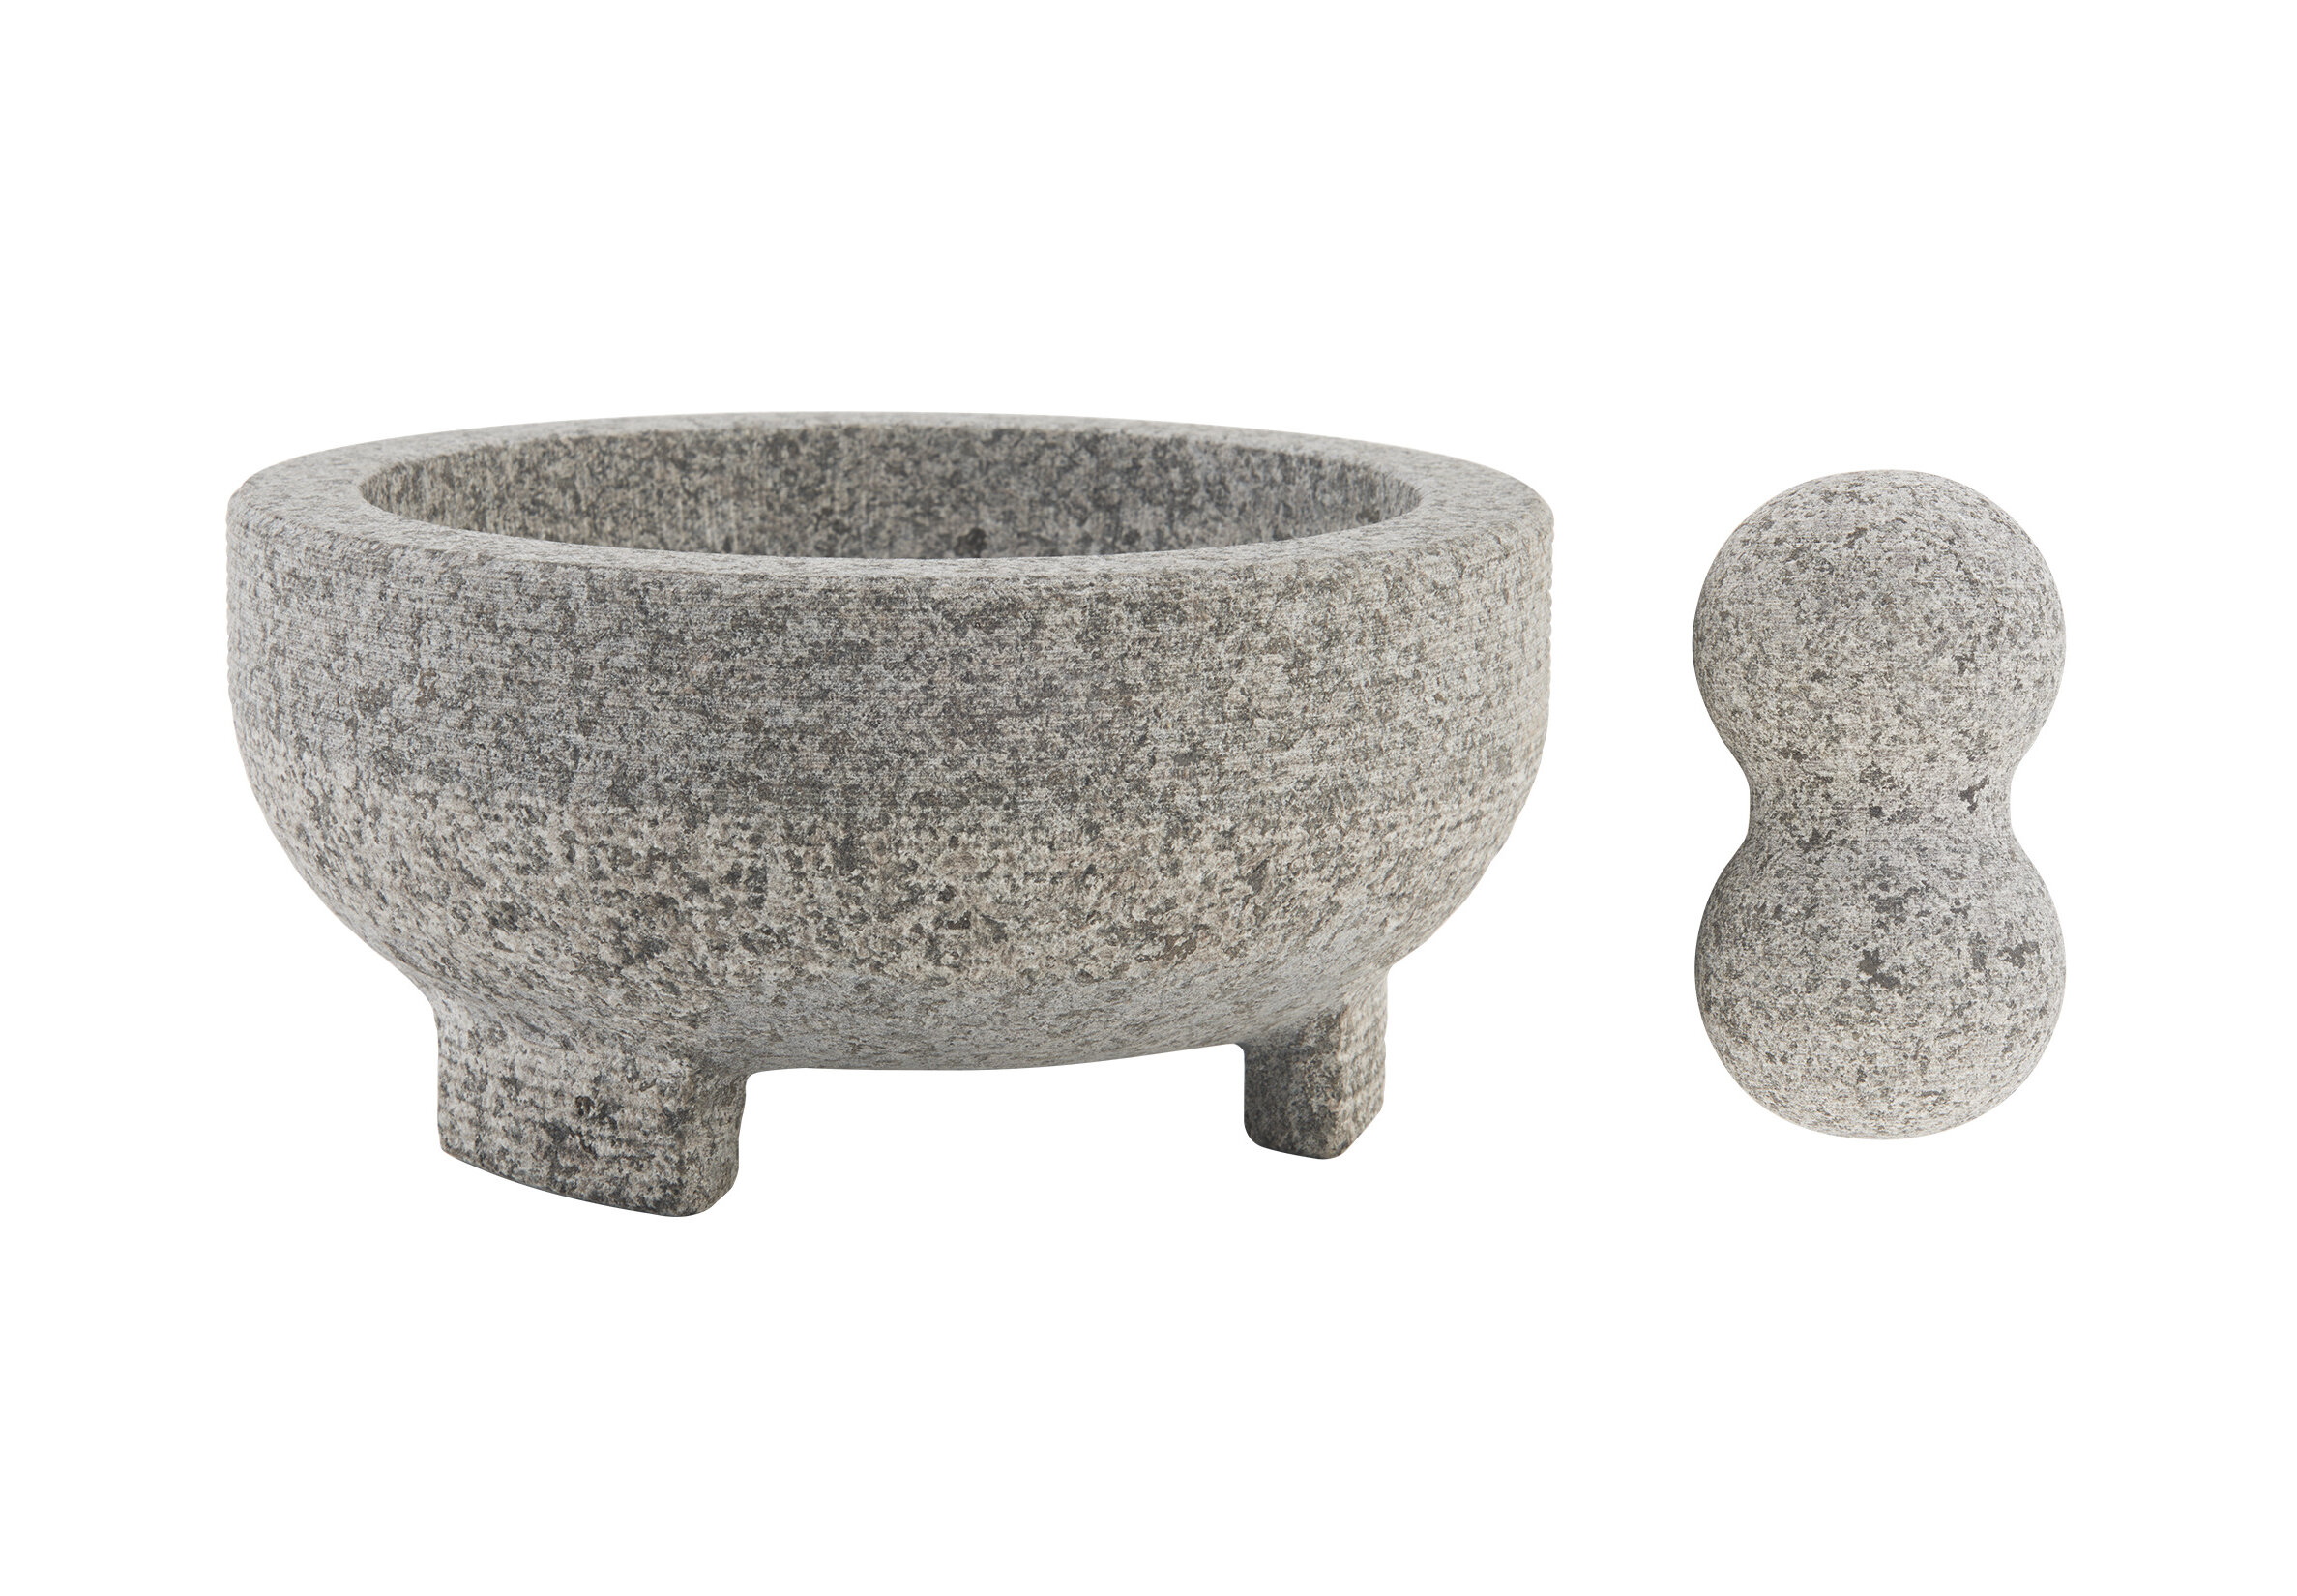 Libertyware Stone Granite Mortar and Pestle 4 Cup Capacity, 8 Inch, Gray